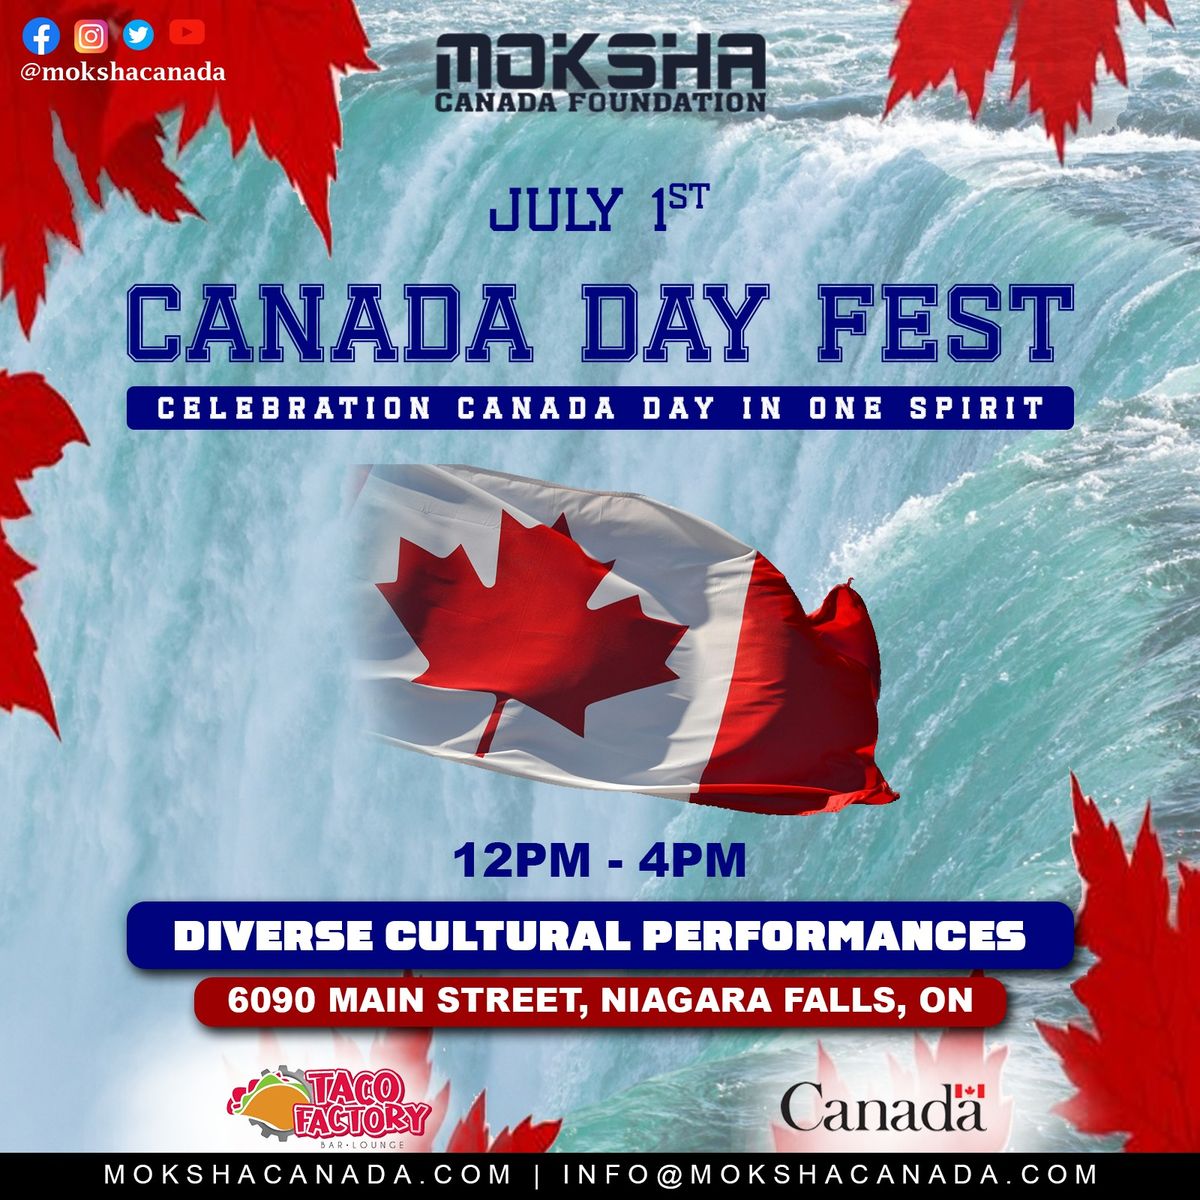 Canada Day Fest